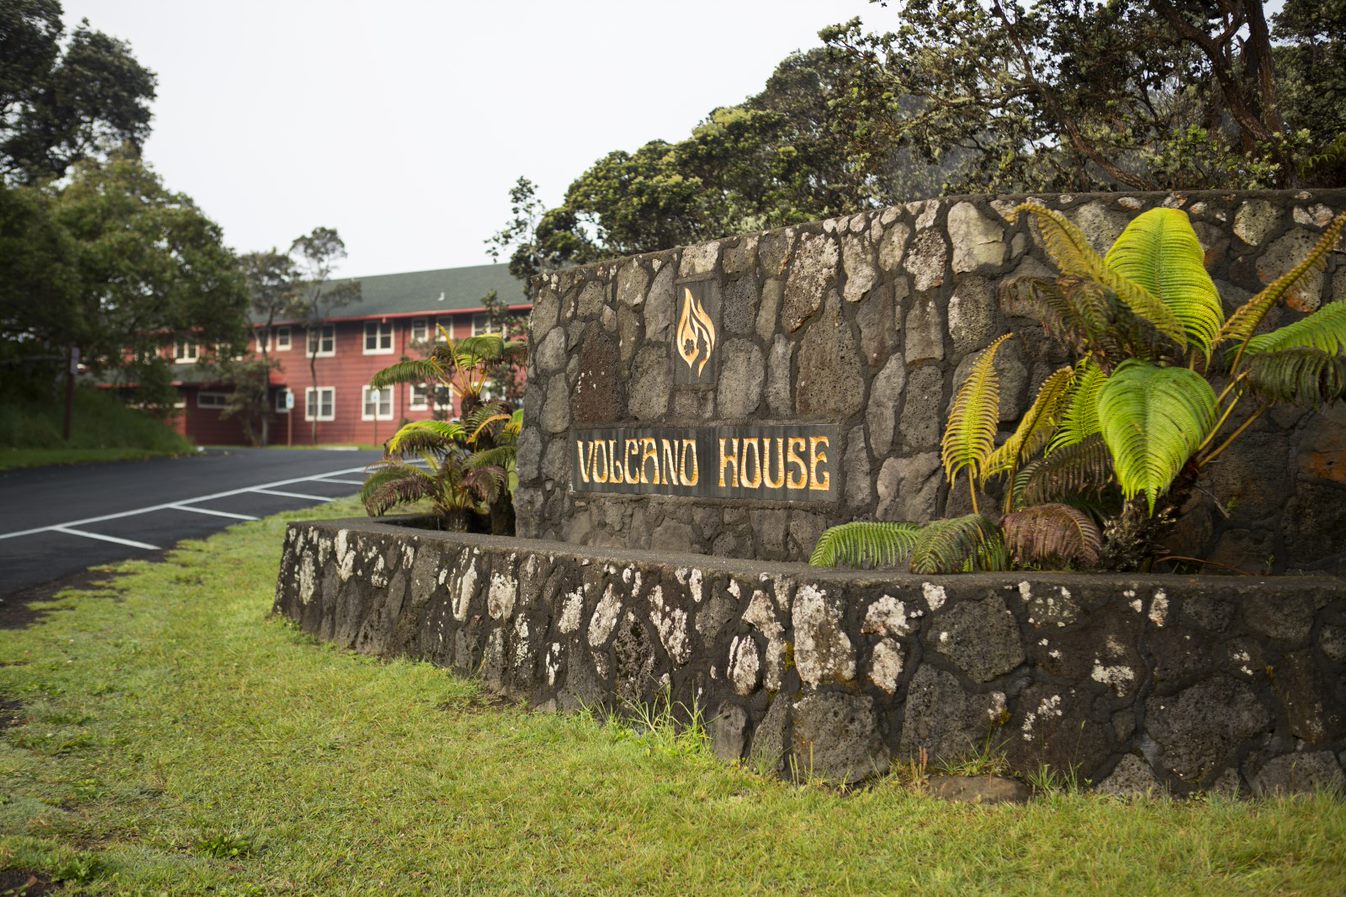 ʻĀinahou Ranch House and Gardens - Hawaiʻi Volcanoes National Park